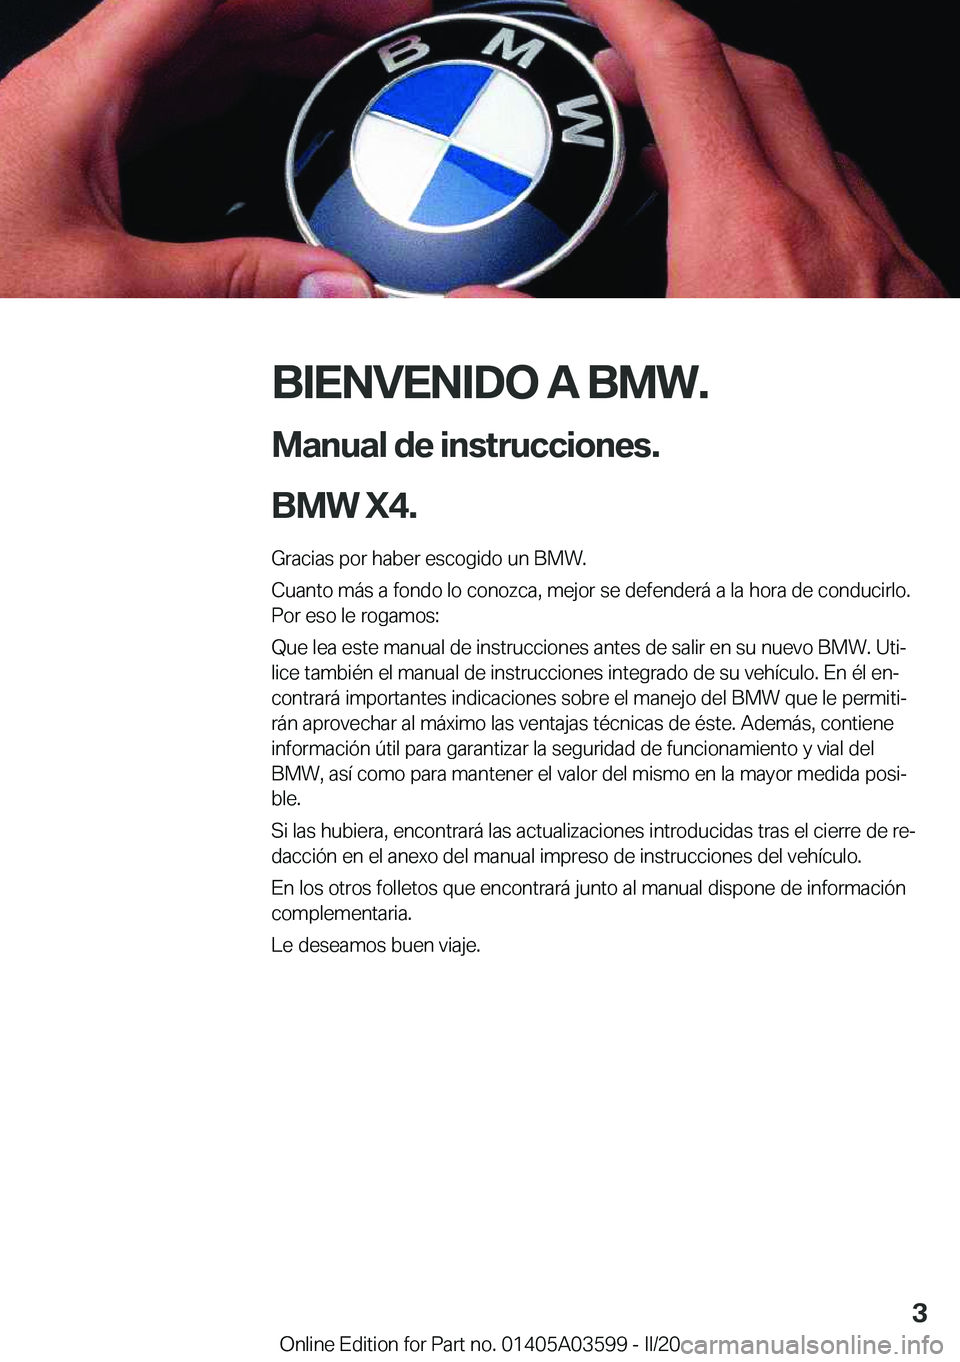 BMW X4 2020  Manuales de Empleo (in Spanish) �B�I�E�N�V�E�N�I�D�O��A��B�M�W�.
�M�a�n�u�a�l��d�e��i�n�s�t�r�u�c�c�i�o�n�e�s�.
�B�M�W��X�4�. �G�r�a�c�i�a�s��p�o�r��h�a�b�e�r��e�s�c�o�g�i�d�o��u�n��B�M�W�.�C�u�a�n�t�o��m�